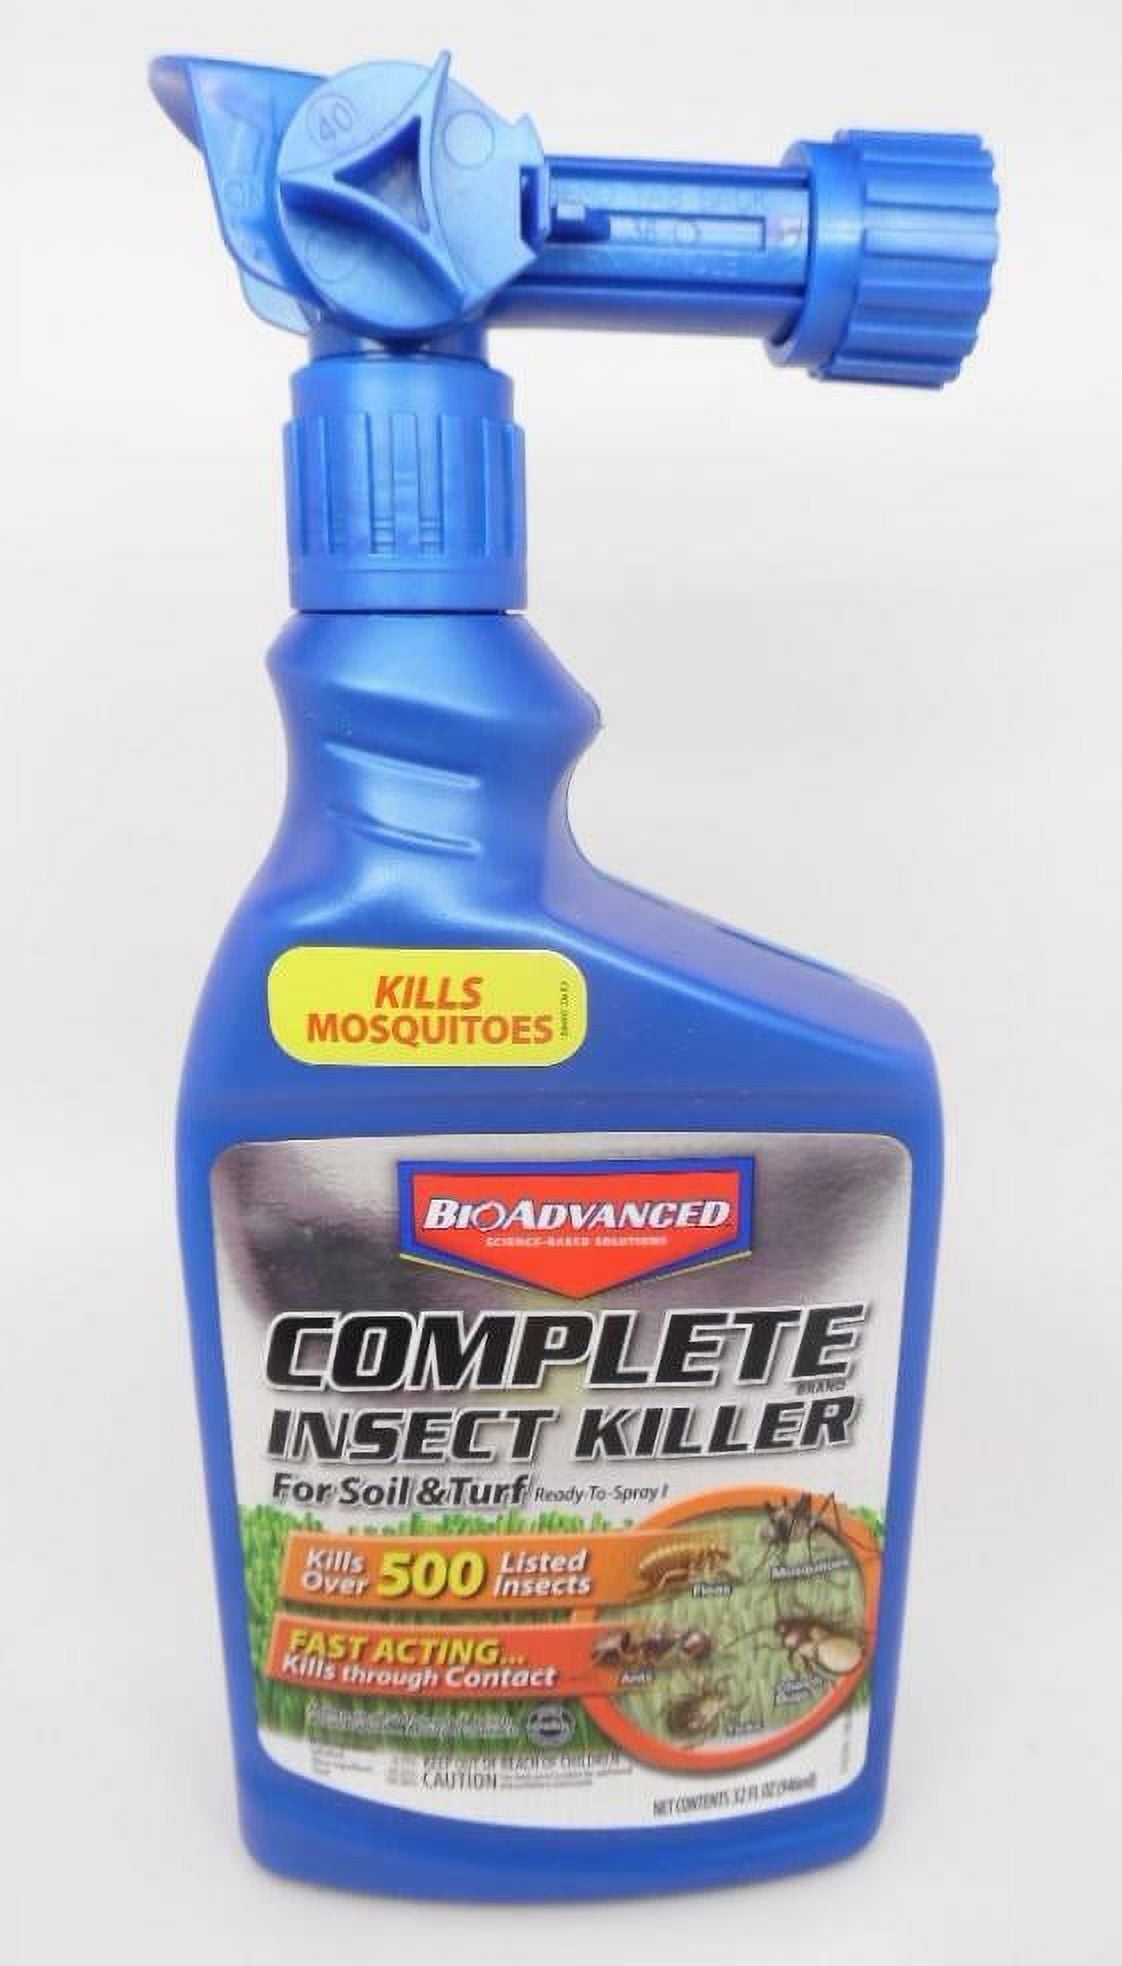 BugPursuit, Instant Natural Indoor Pest Control Spray, Carpet Beetle Killer, Fly Repellent, and Many More. USDA Biobased Certified, Plant Based